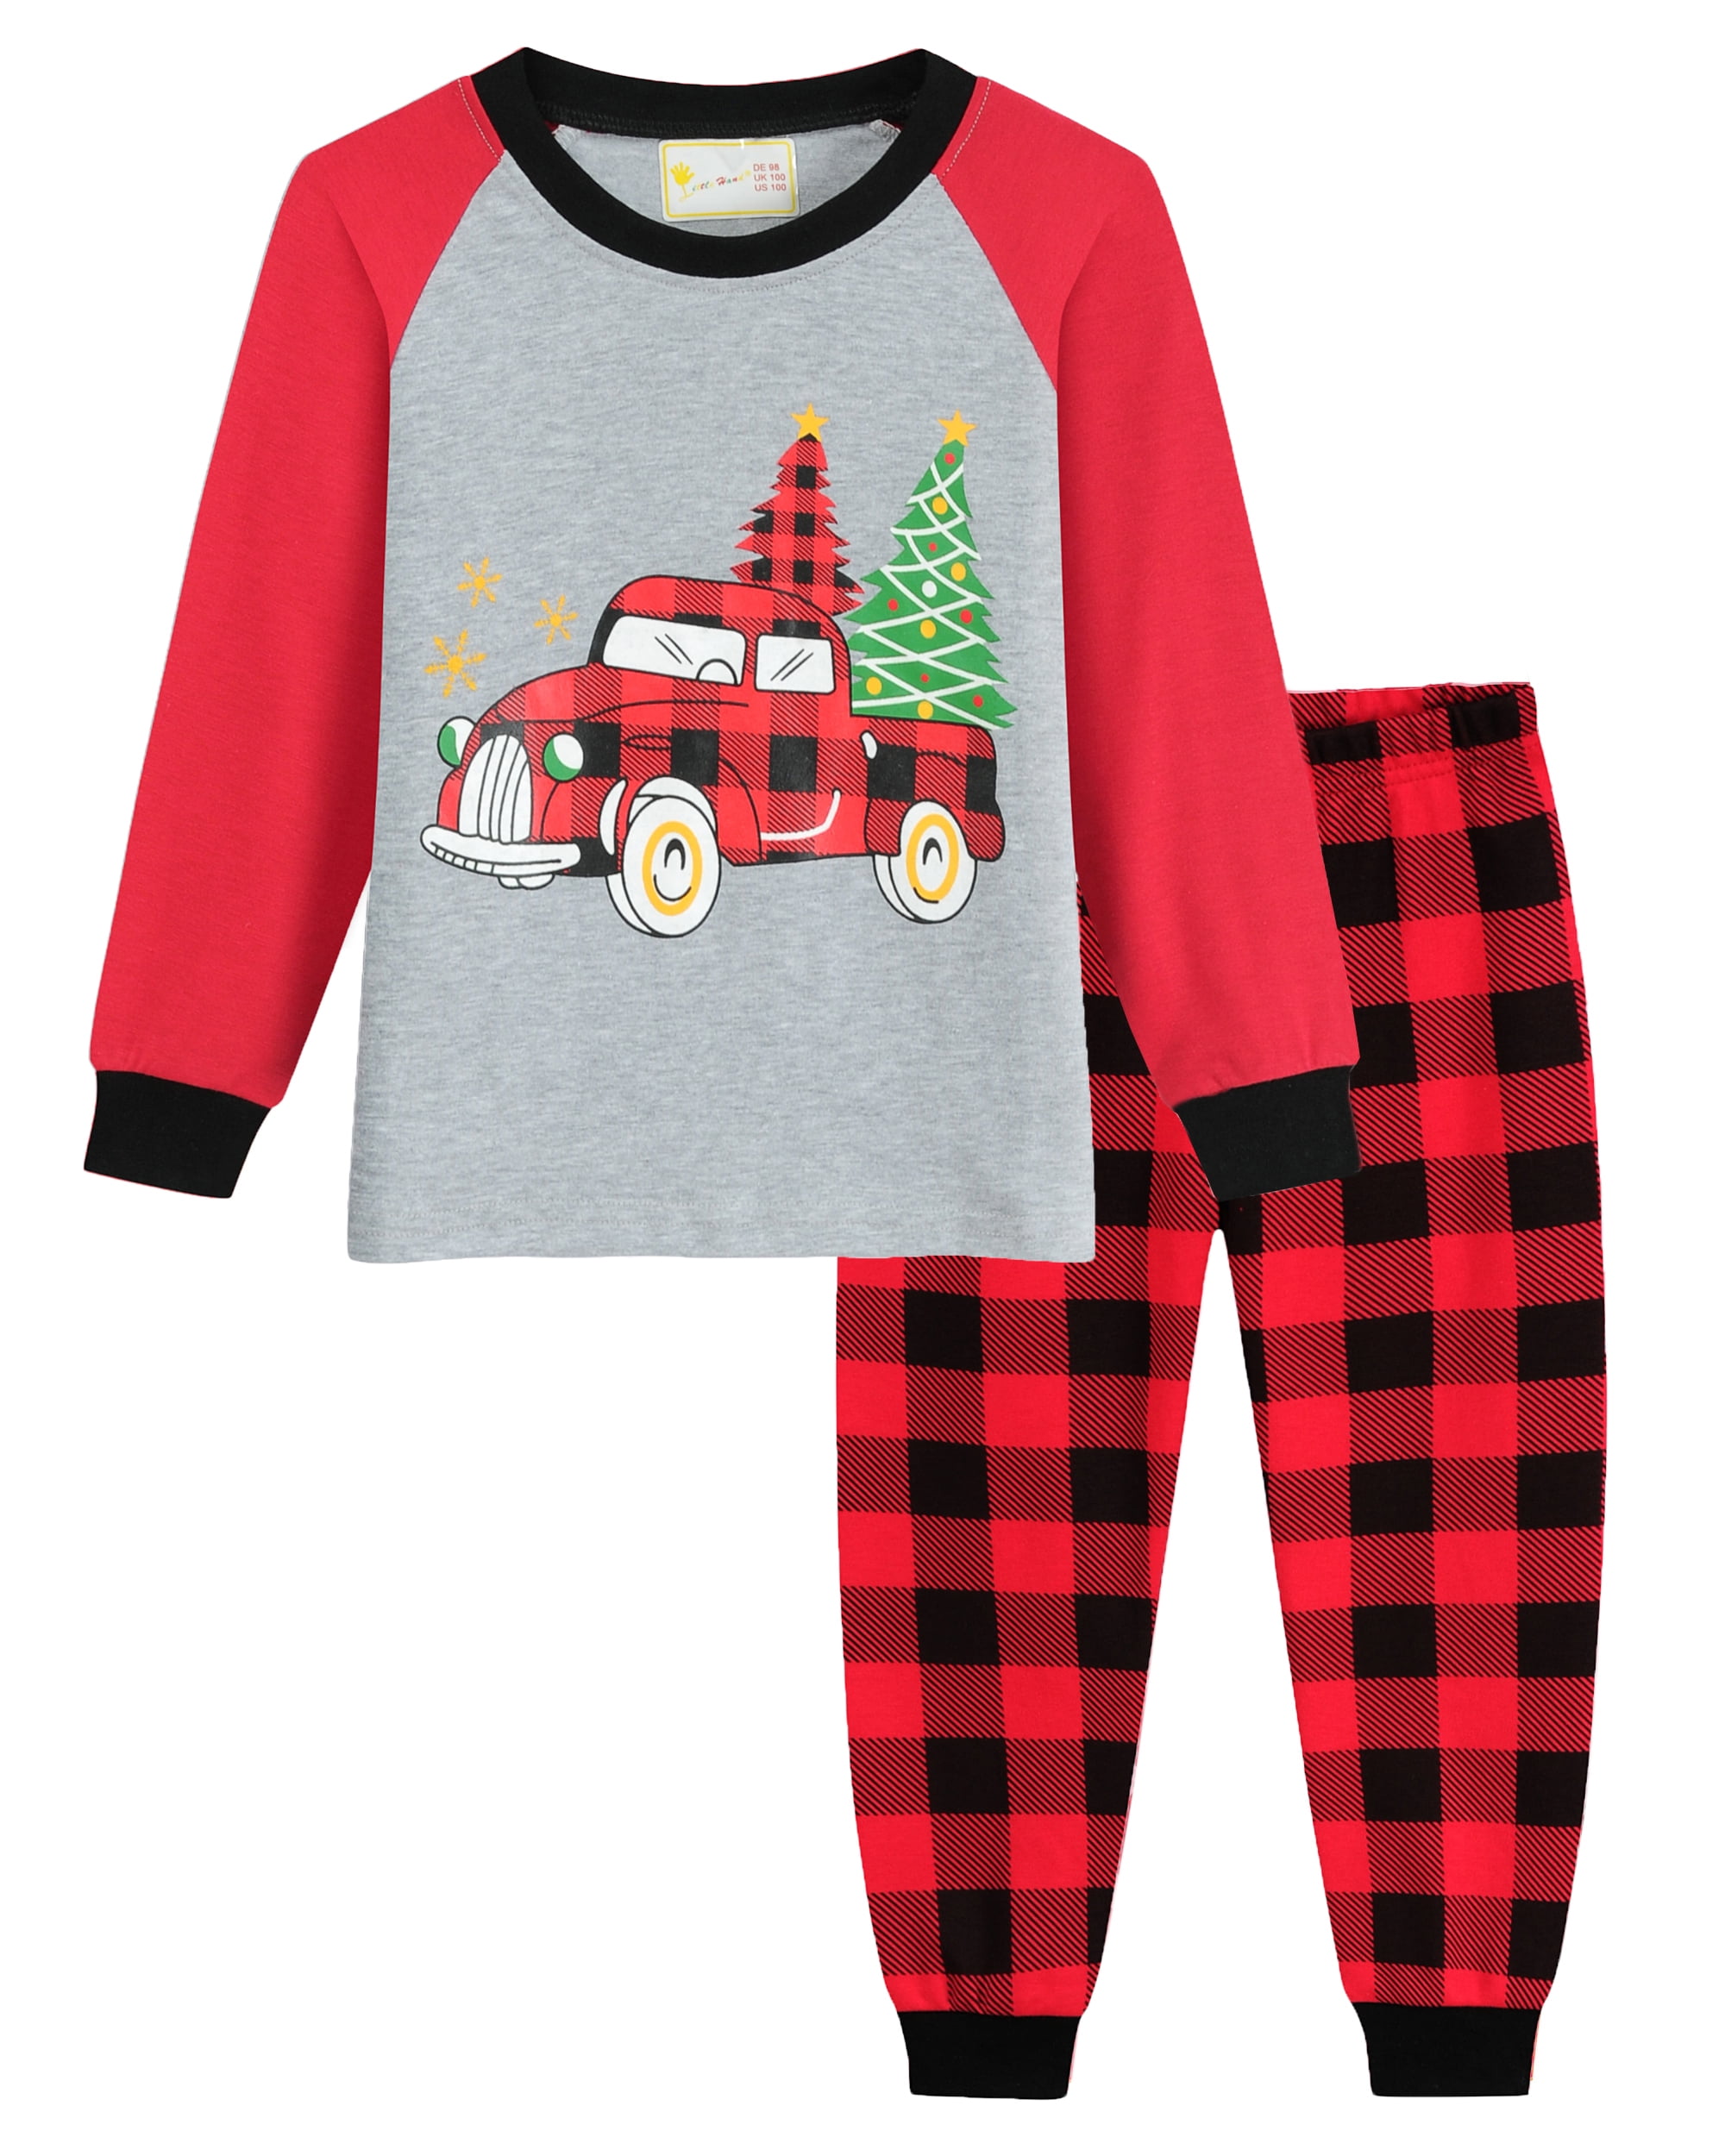 Little Hand Toddler Boys Christmas Pajamas Set Cotton Pjs Sleepwear 2t 